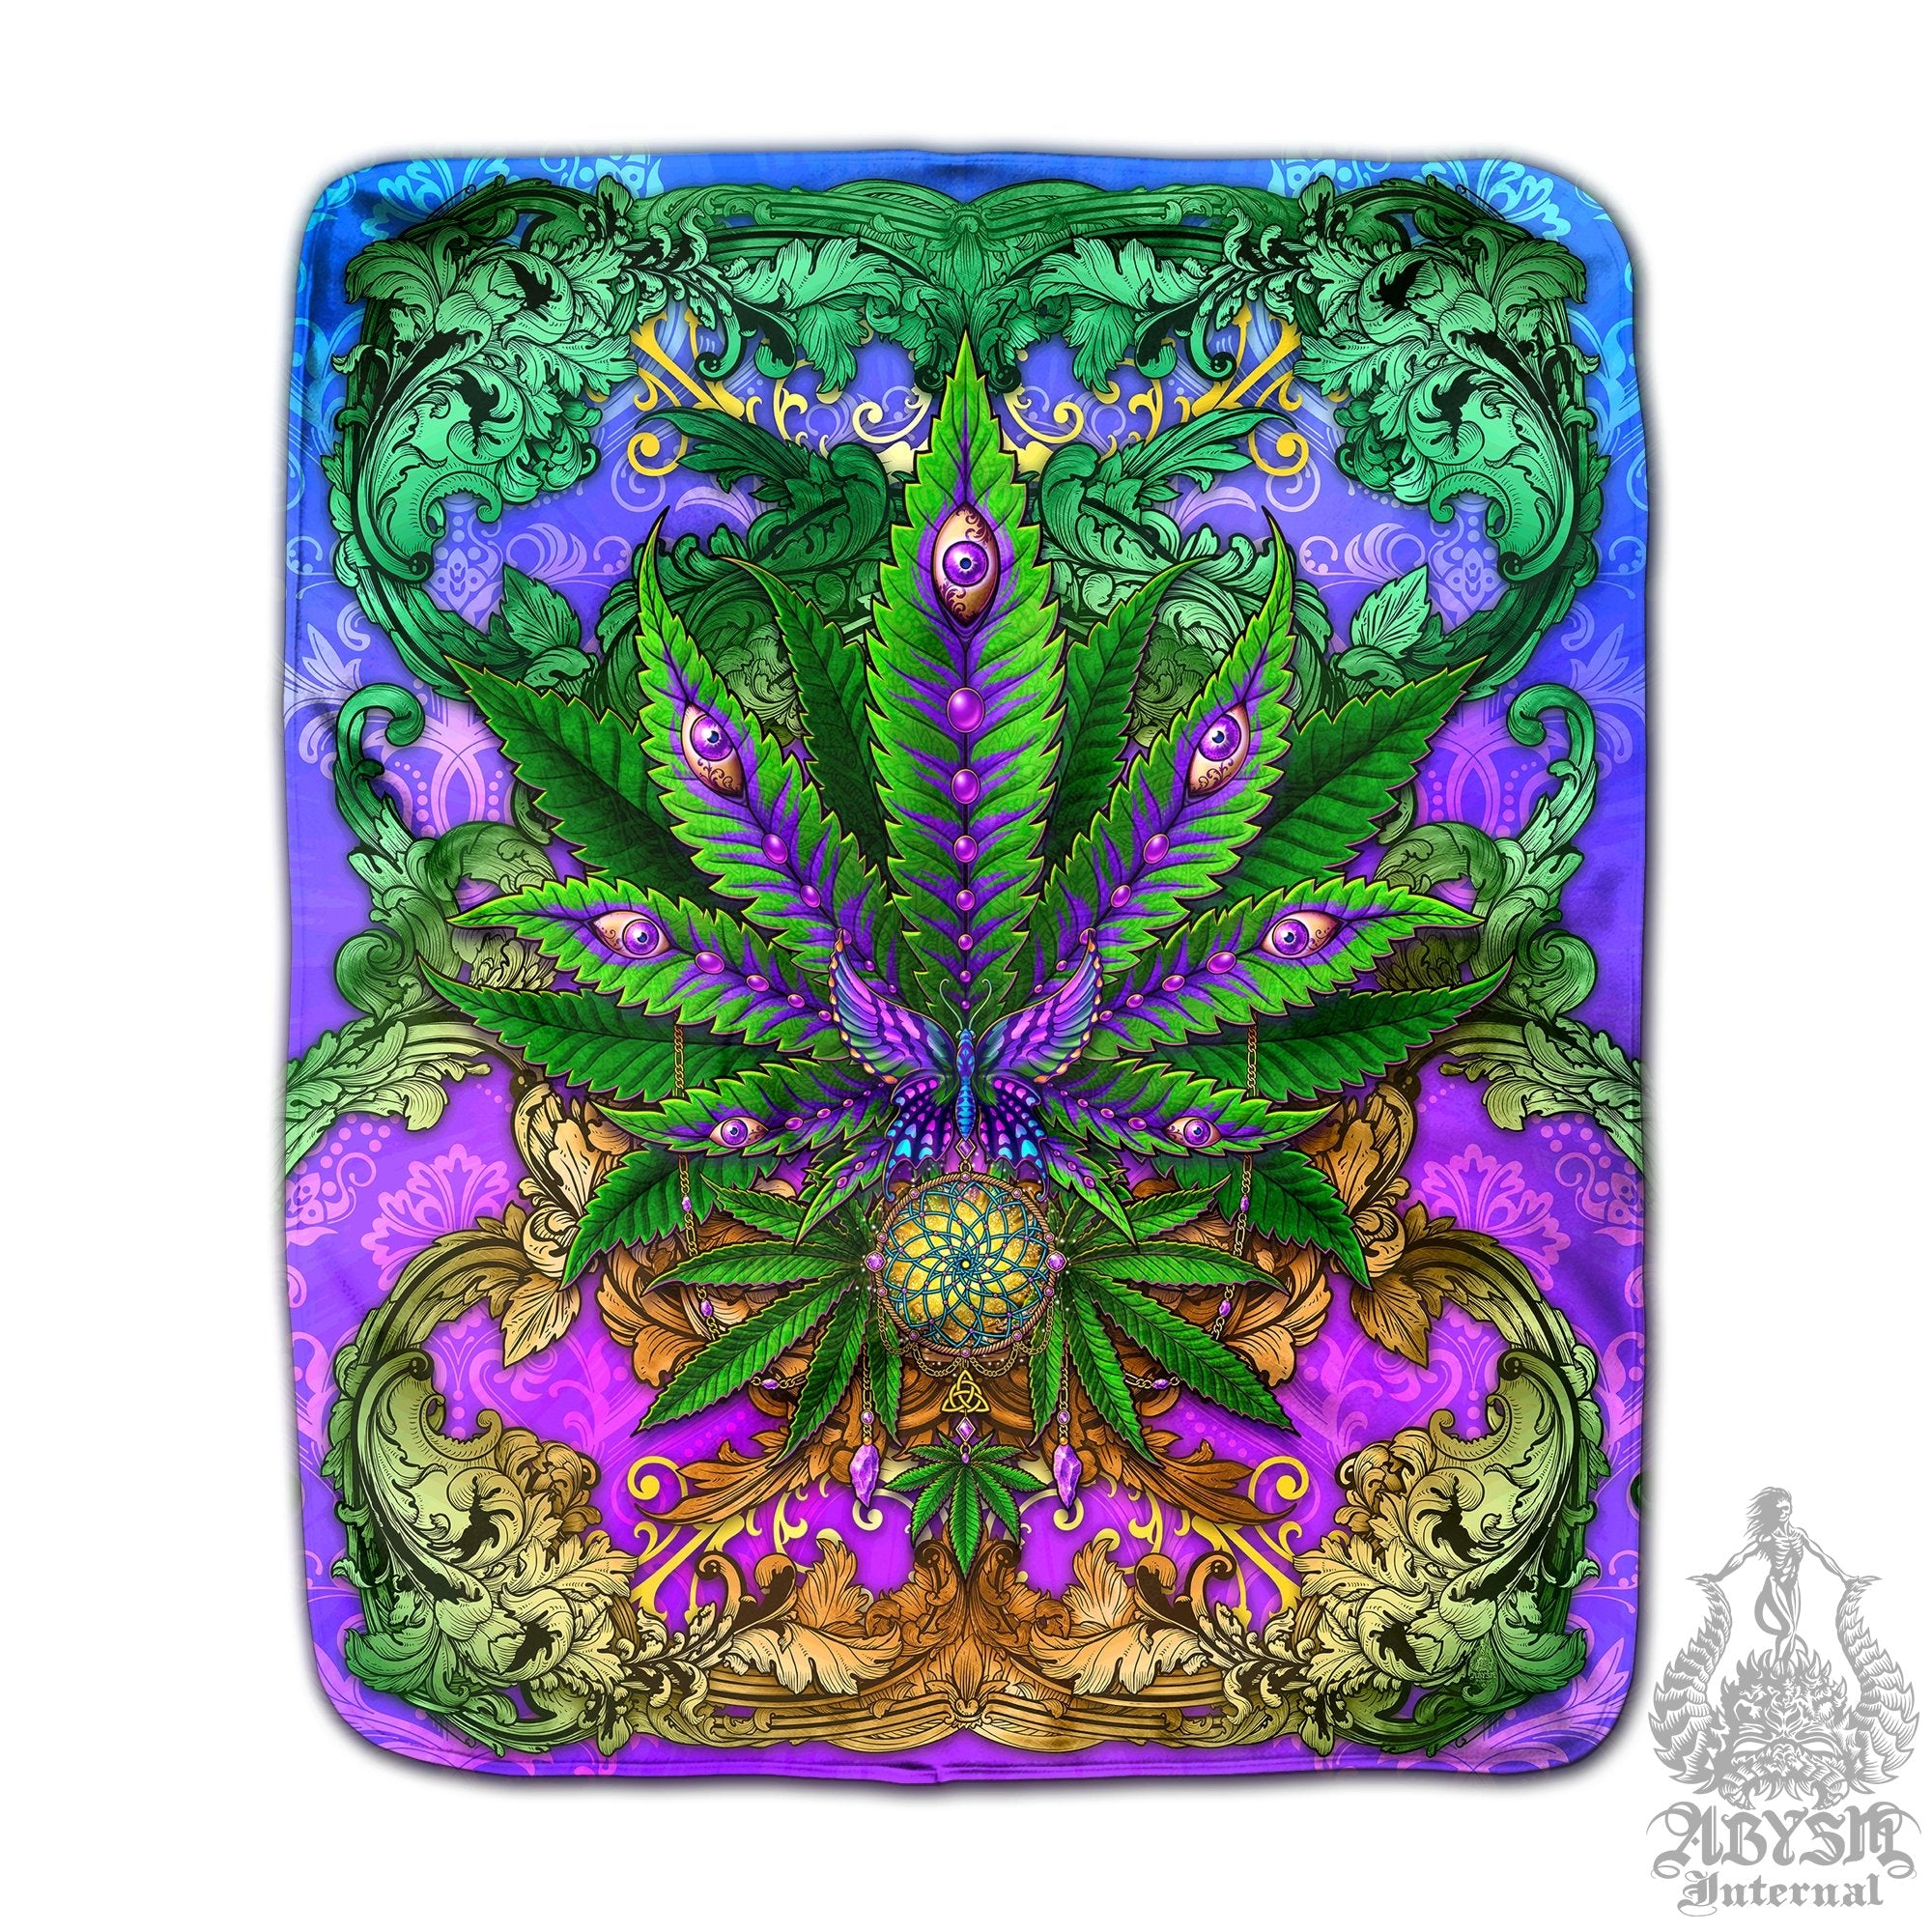 Weed Throw Fleece Blanket, Cannabis Art, Indie and Hippie Home Decor, 420 Gift - Nature - Abysm Internal